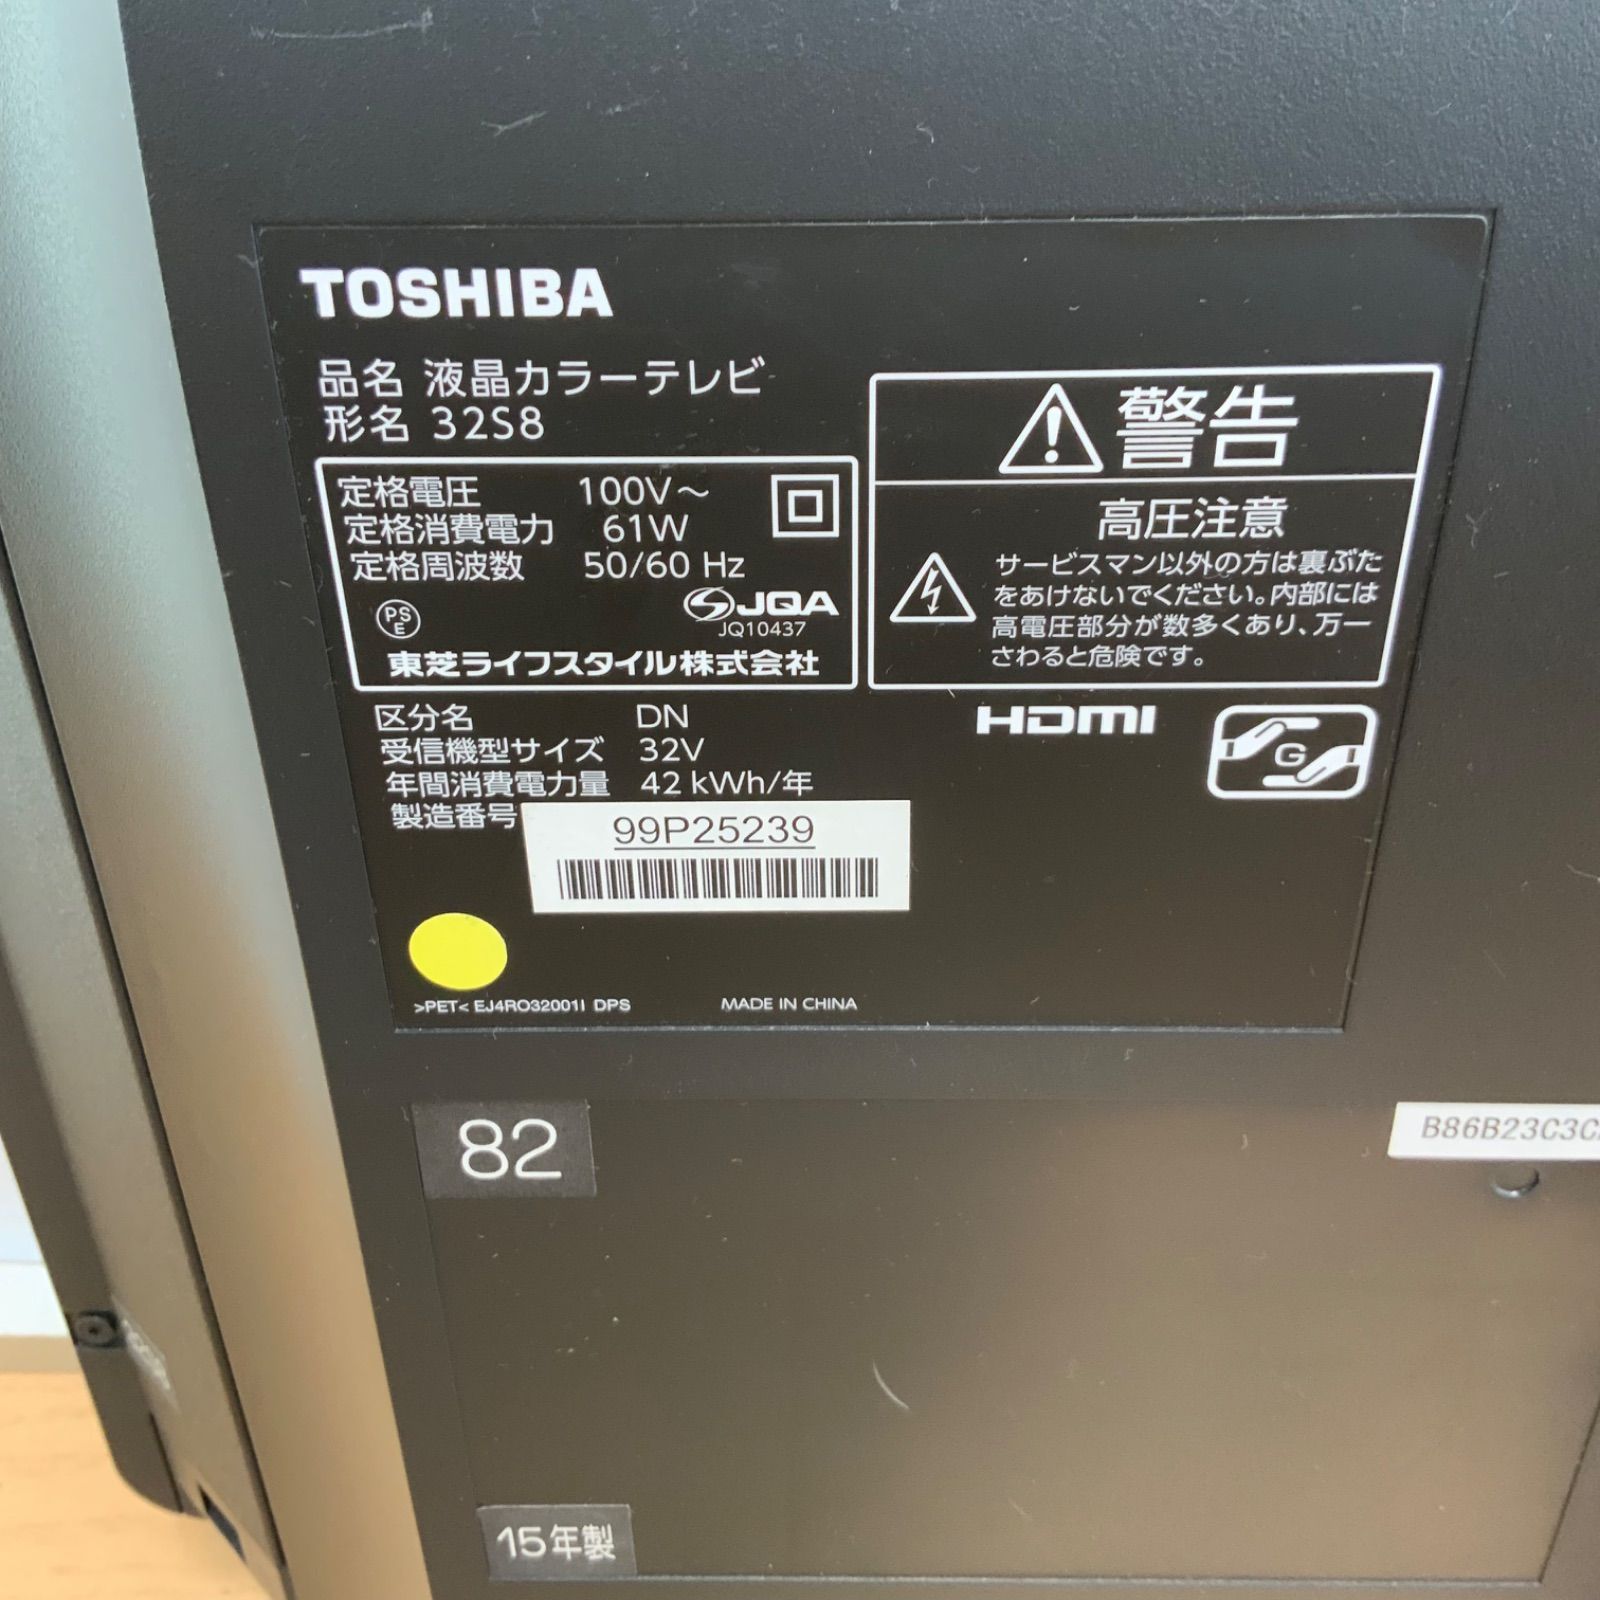 TOSHIBA LED REGZA S8 32S8 - テレビ